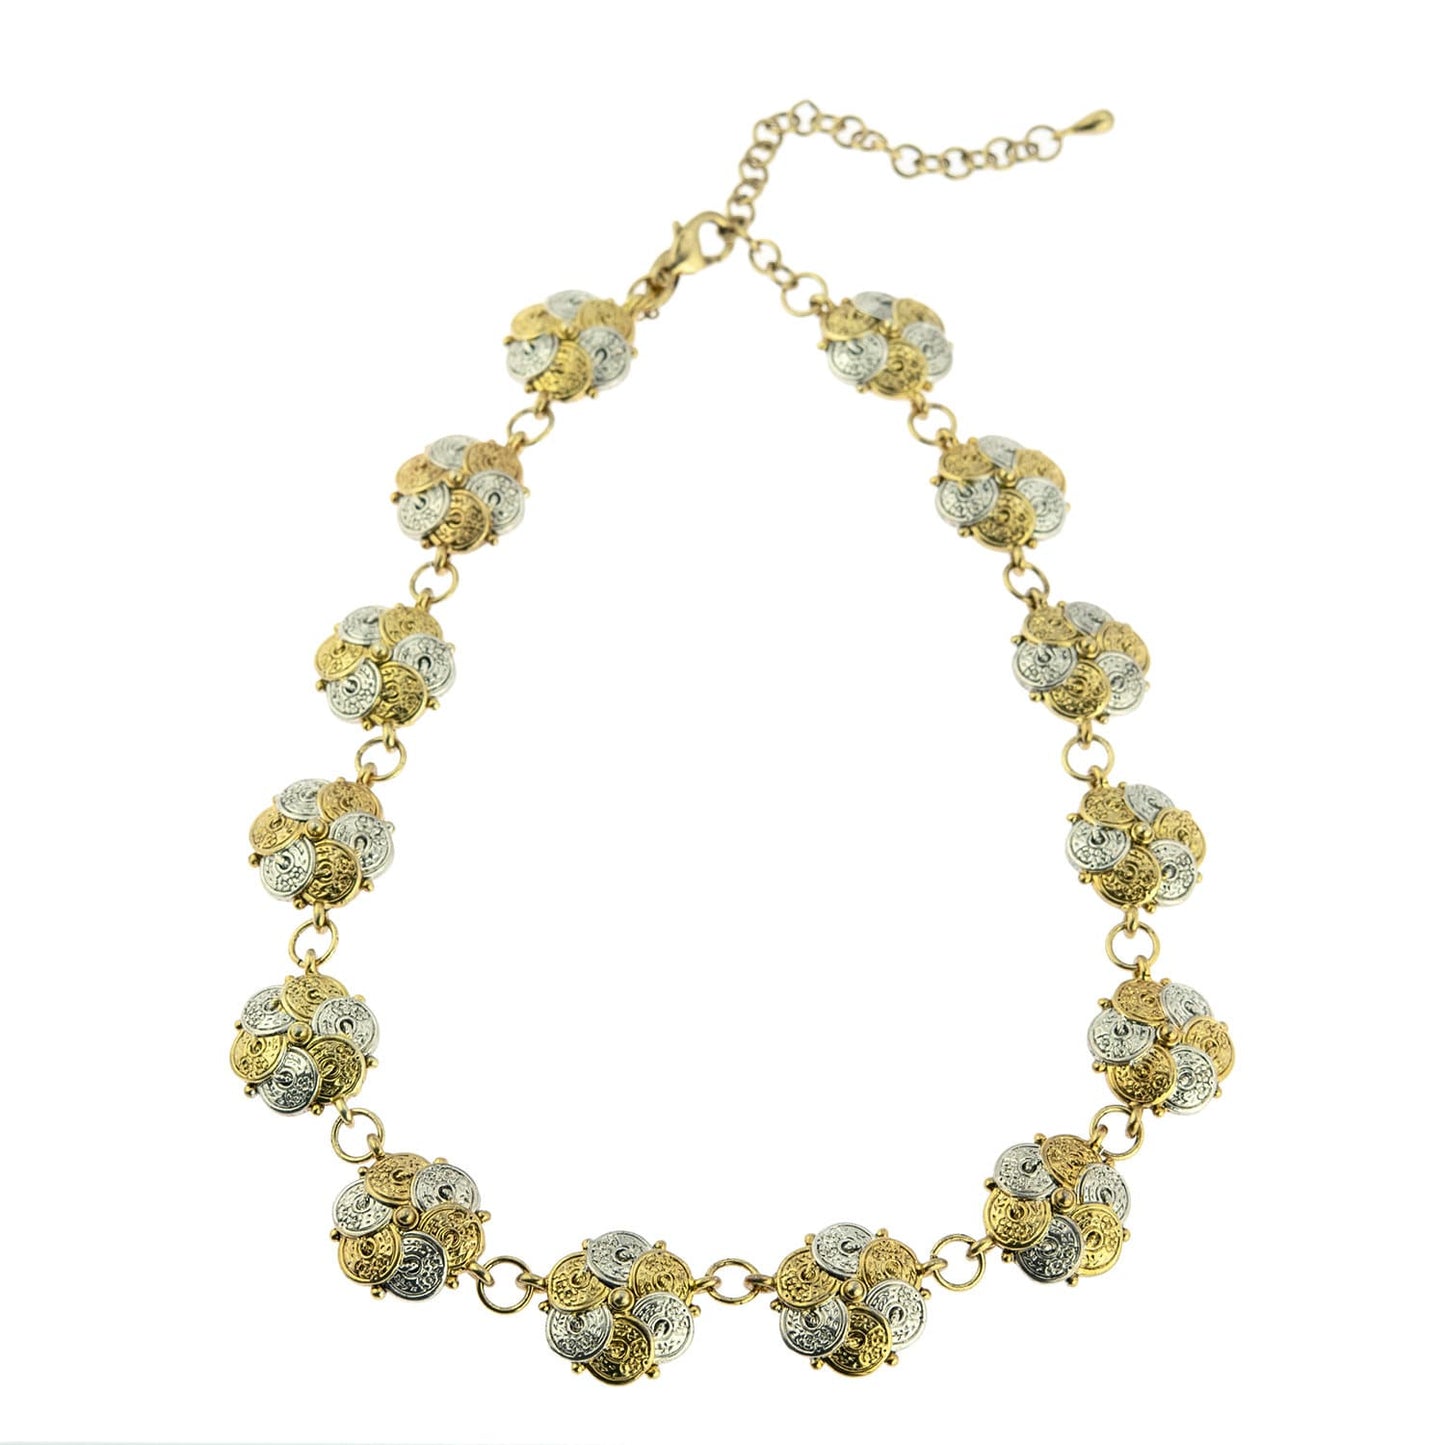 Vintage Oscar De La Renta Beautiful Two Tone 16-19 Inch Necklace #OSN-554